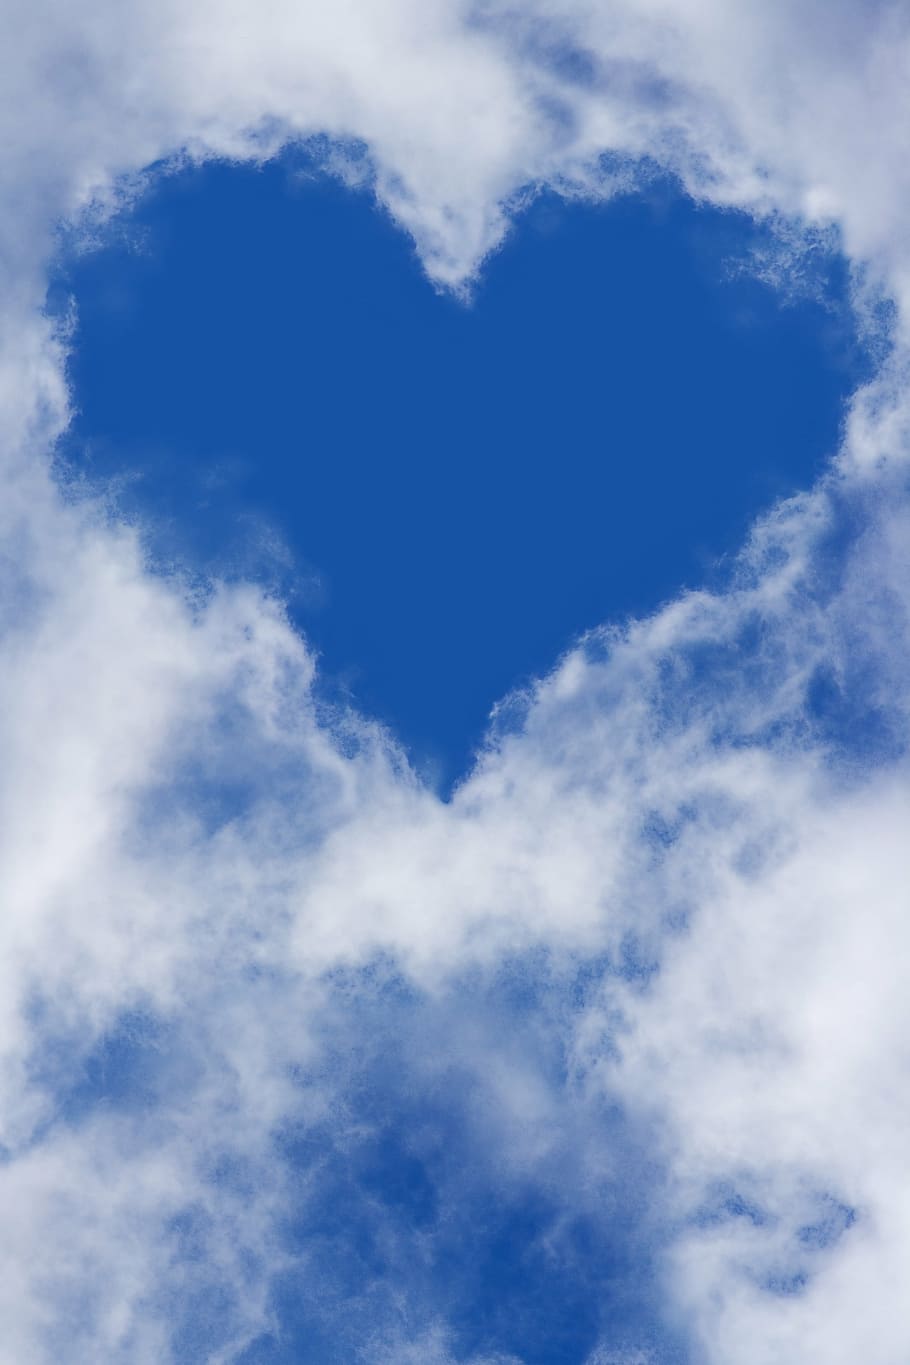 cloud heart-themed photography, heart, sky, clouds, blue sky, cloud - sky, blue, cloudscape, love, heaven